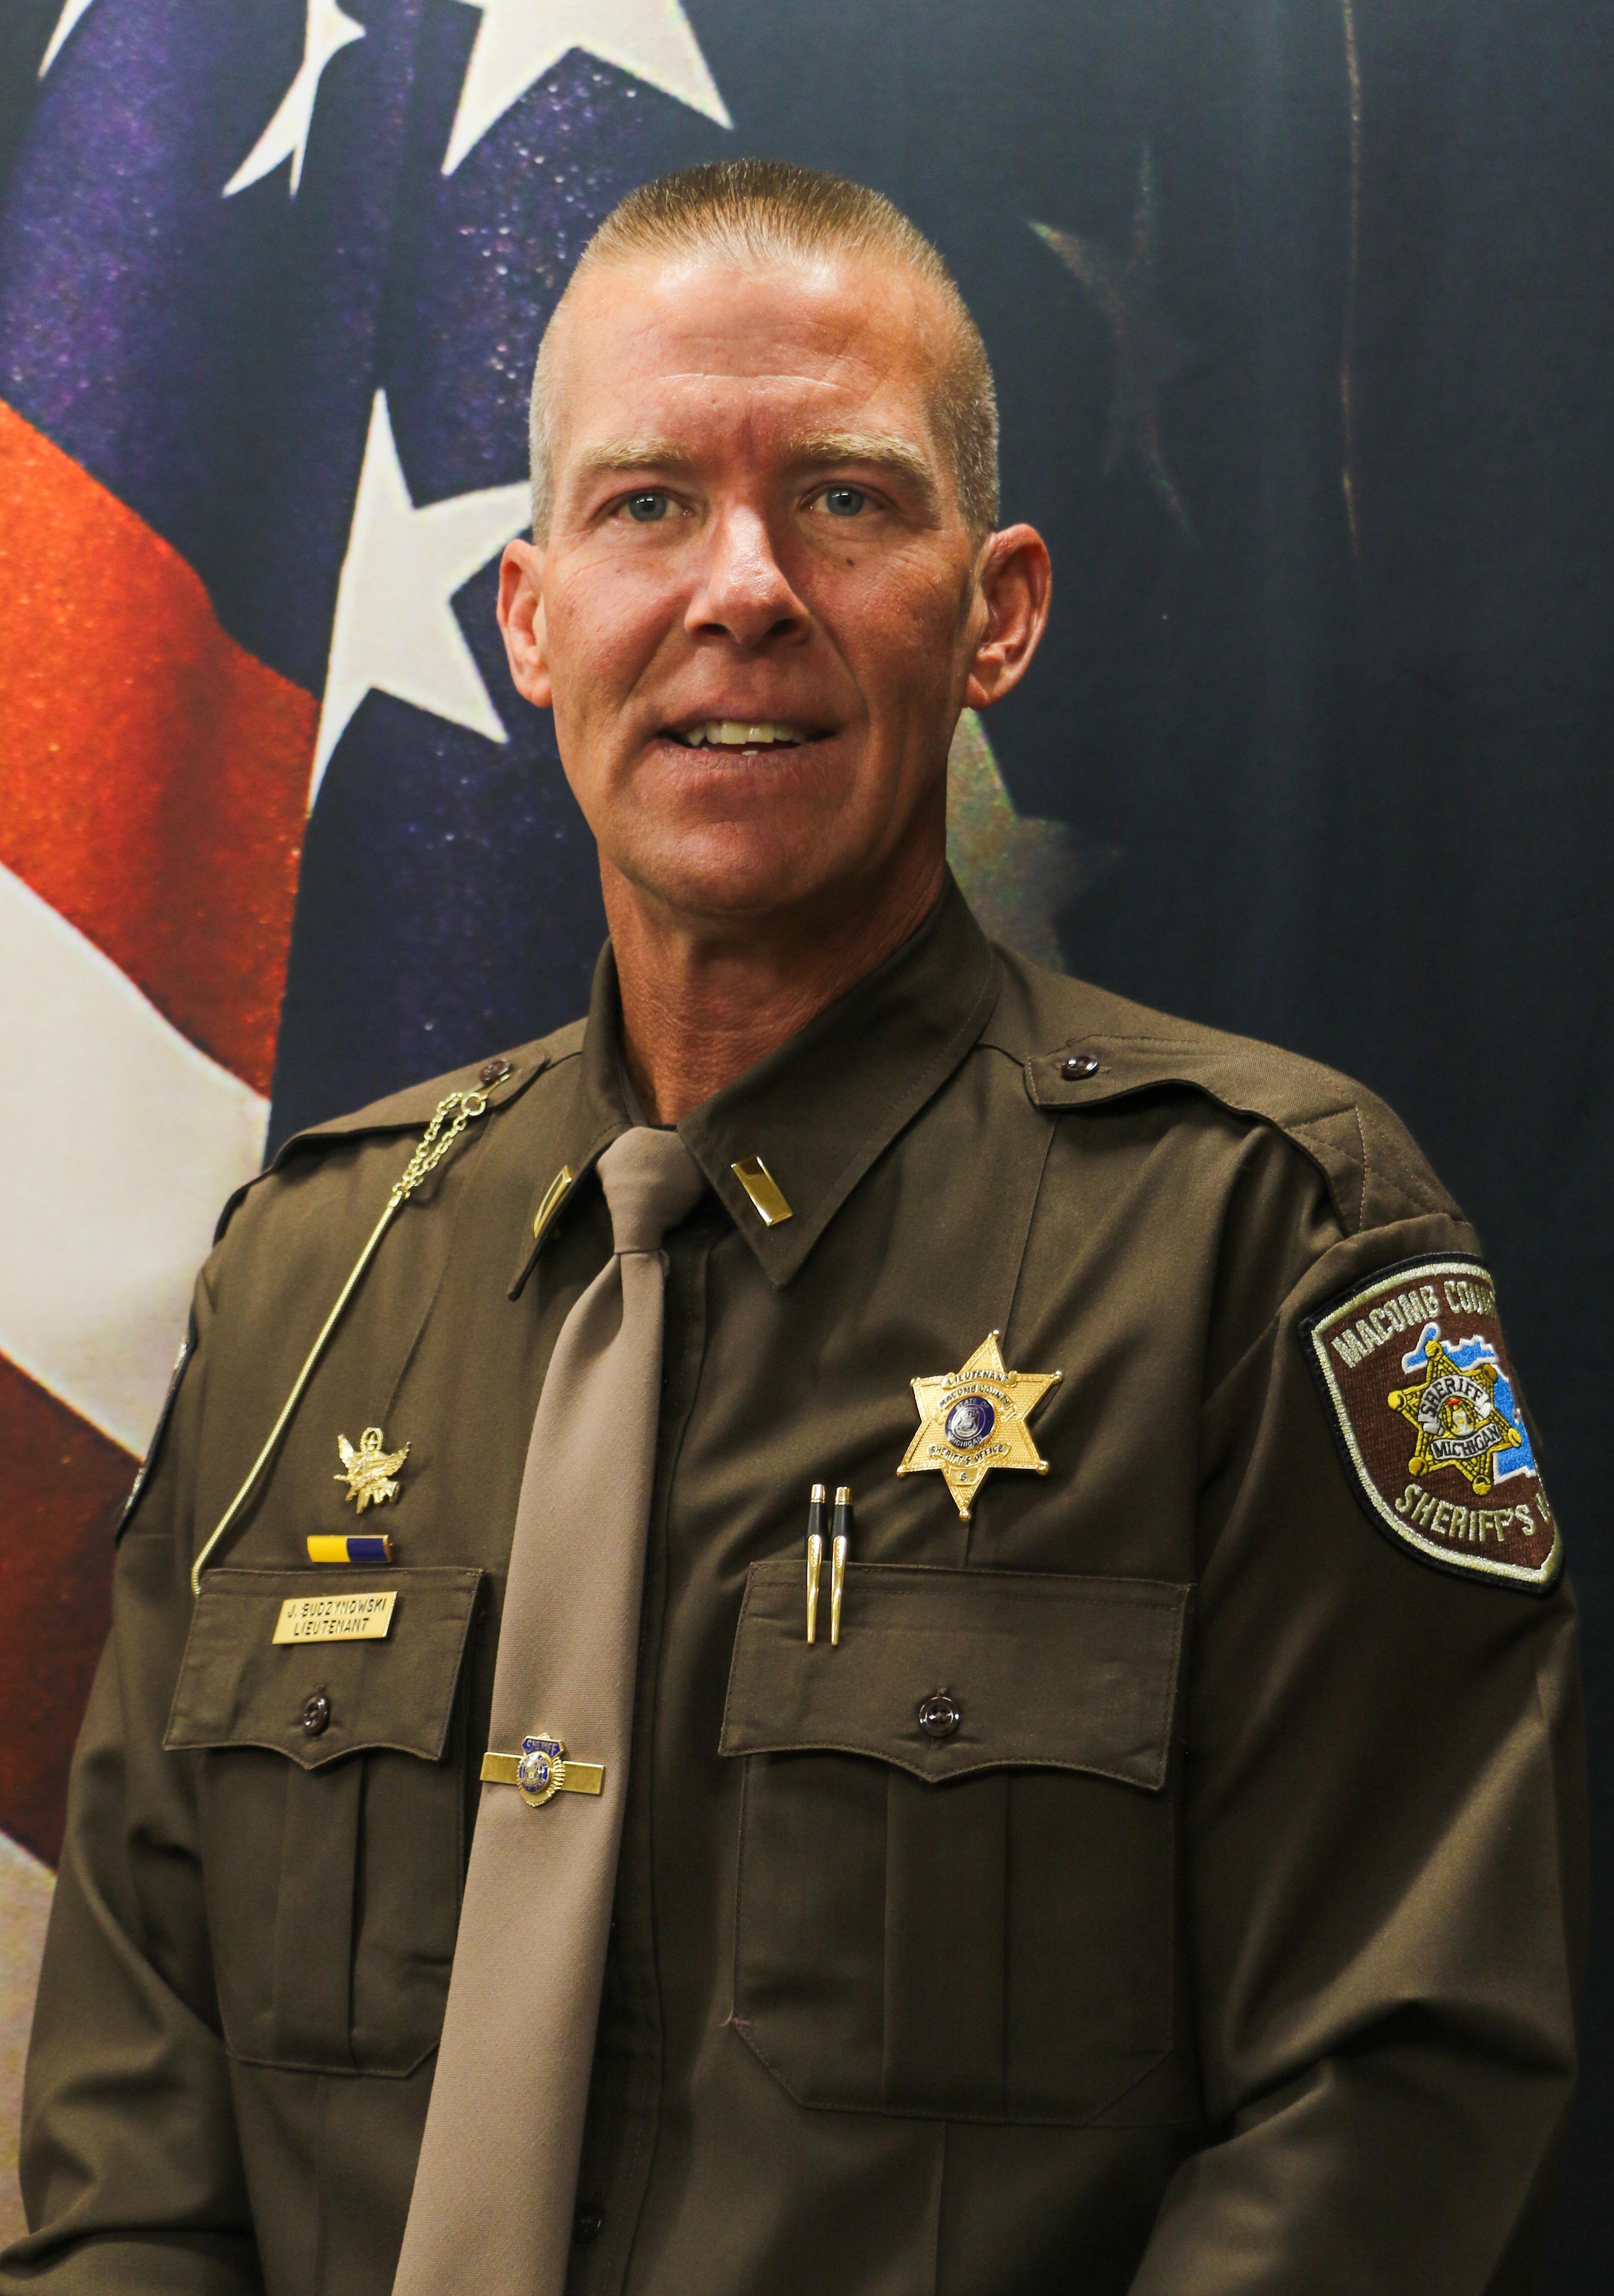 Sheriff - Lieutenant Budzynowski